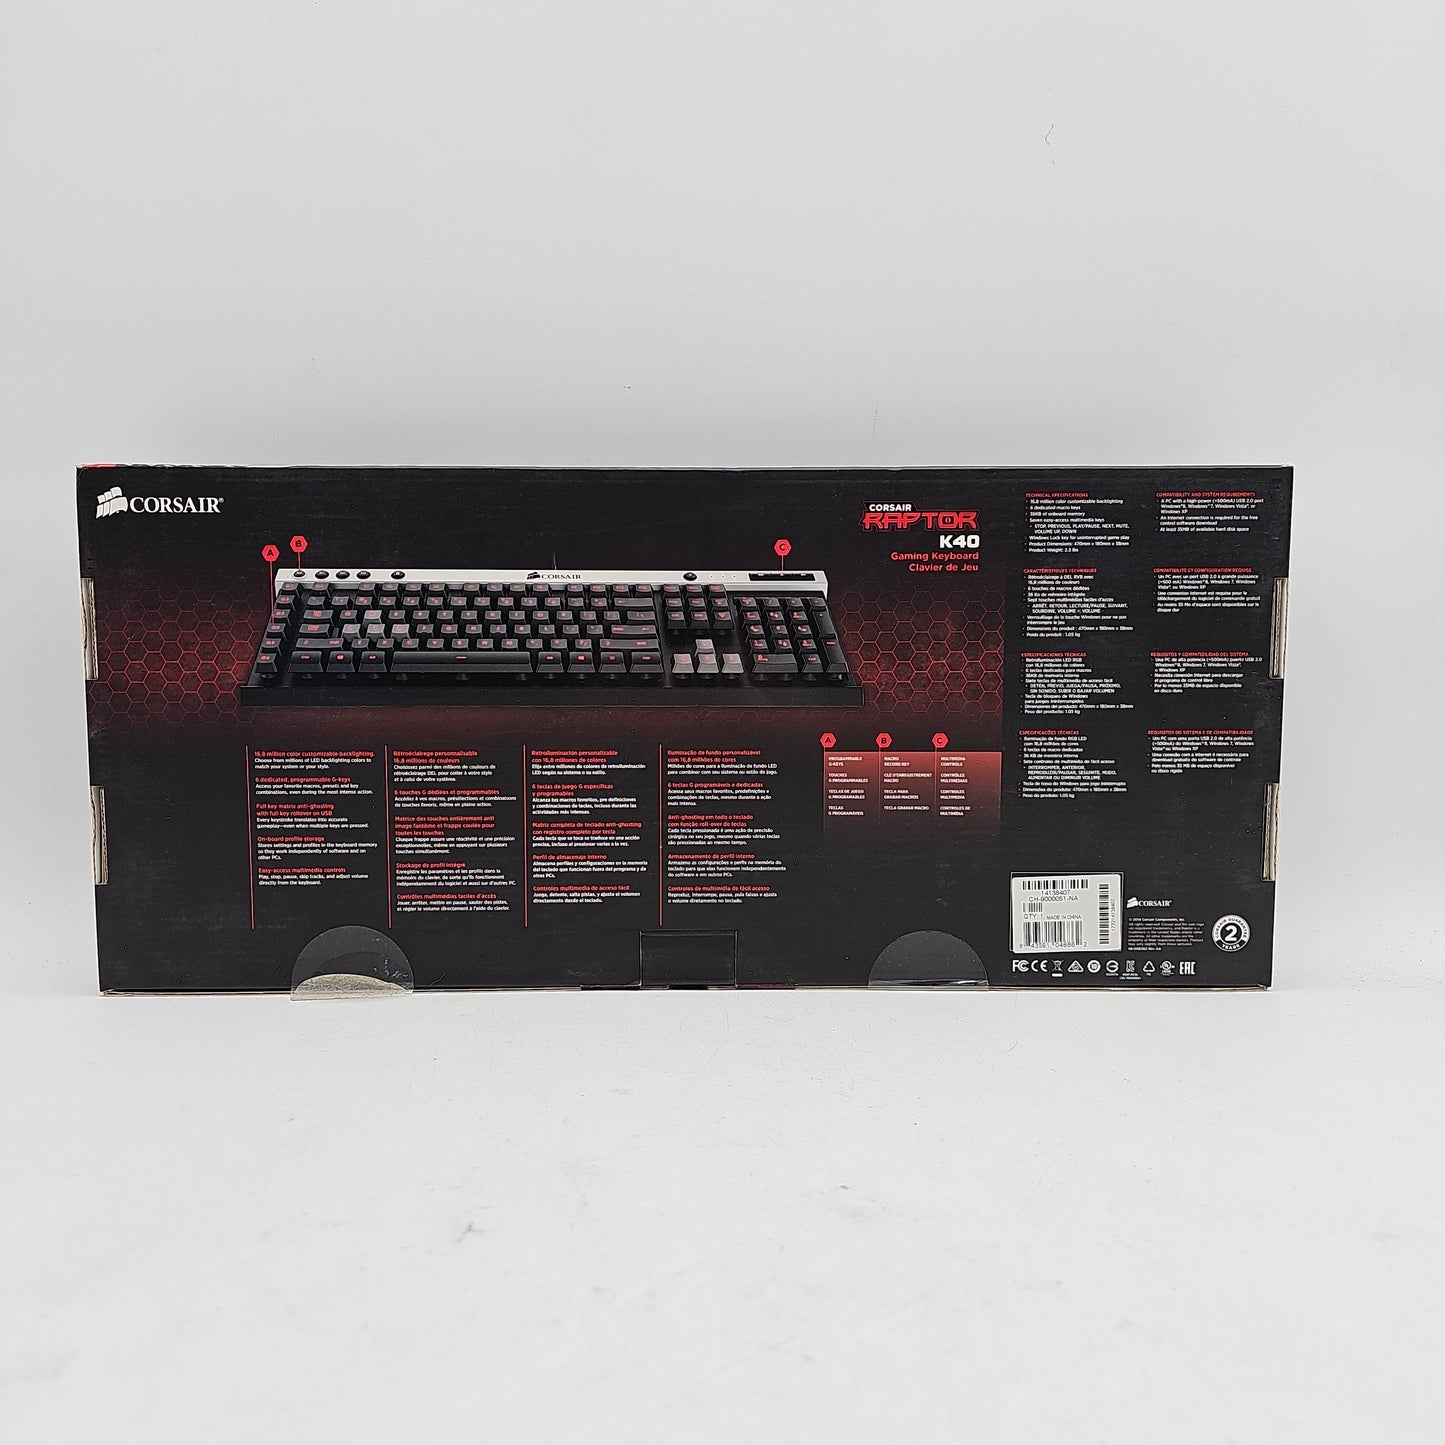 New Corsair Raptor USB Gaming Keyboard K40